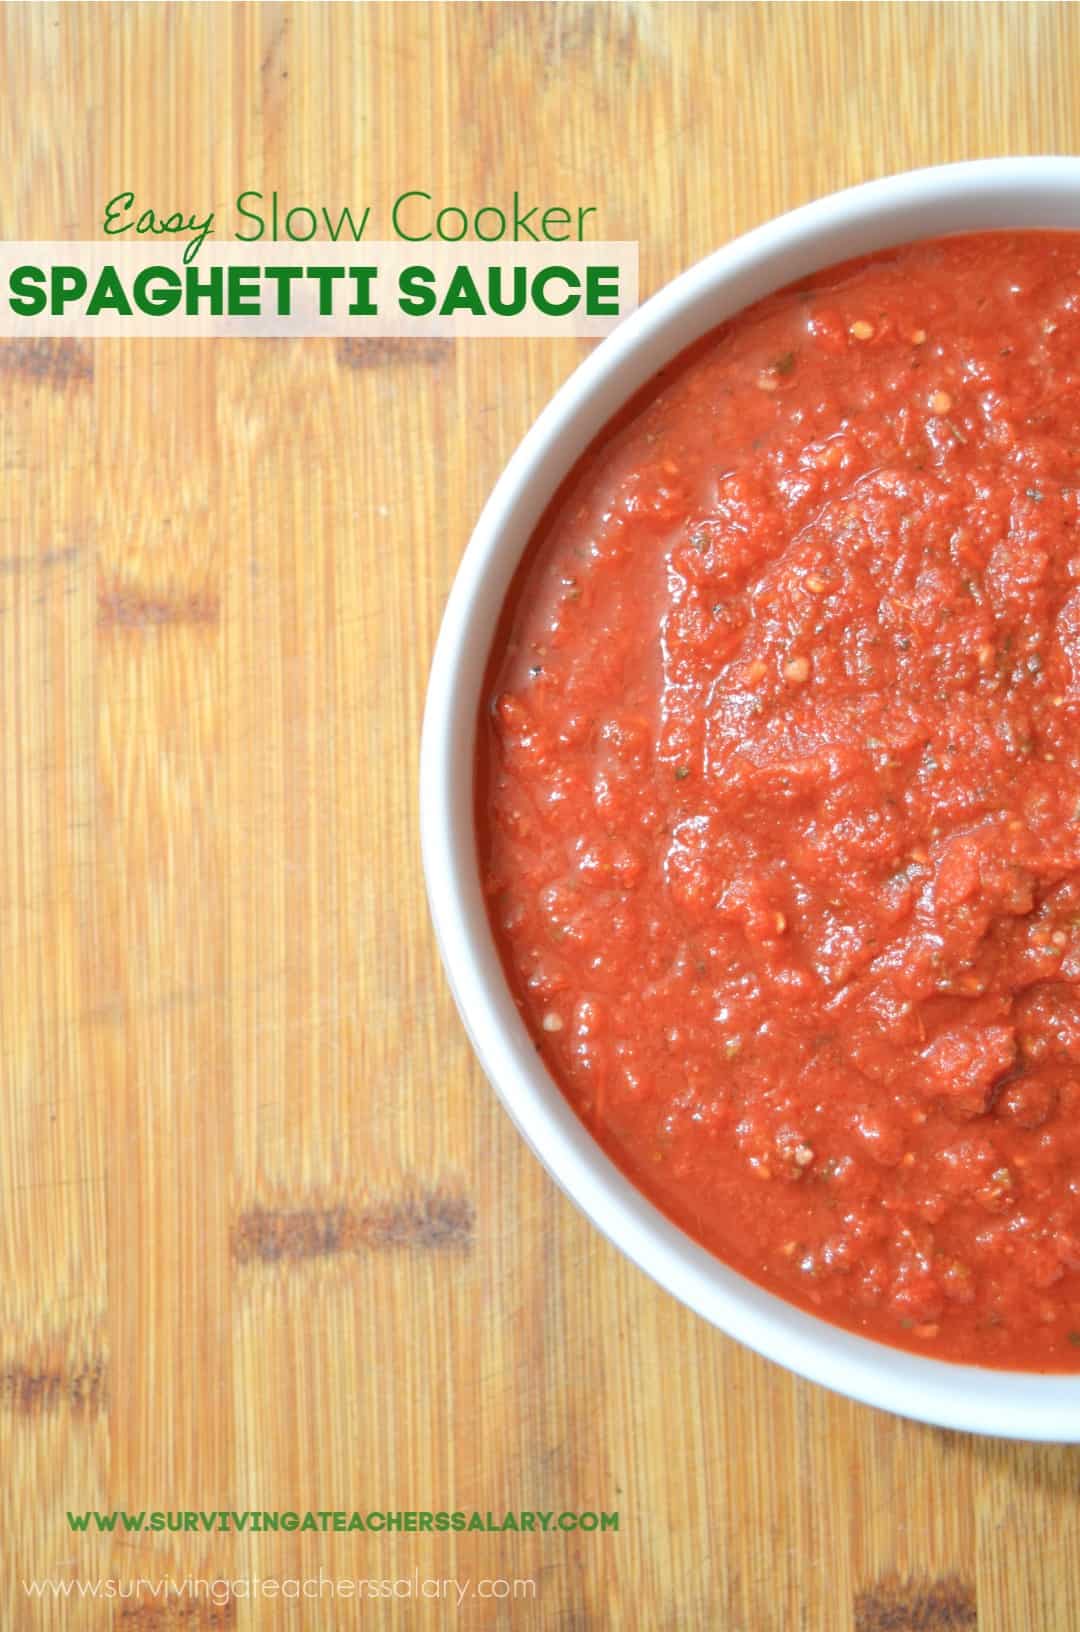 Easy Slow Cooker Spaghetti Sauce Recipe - Tomato Canning Recipe